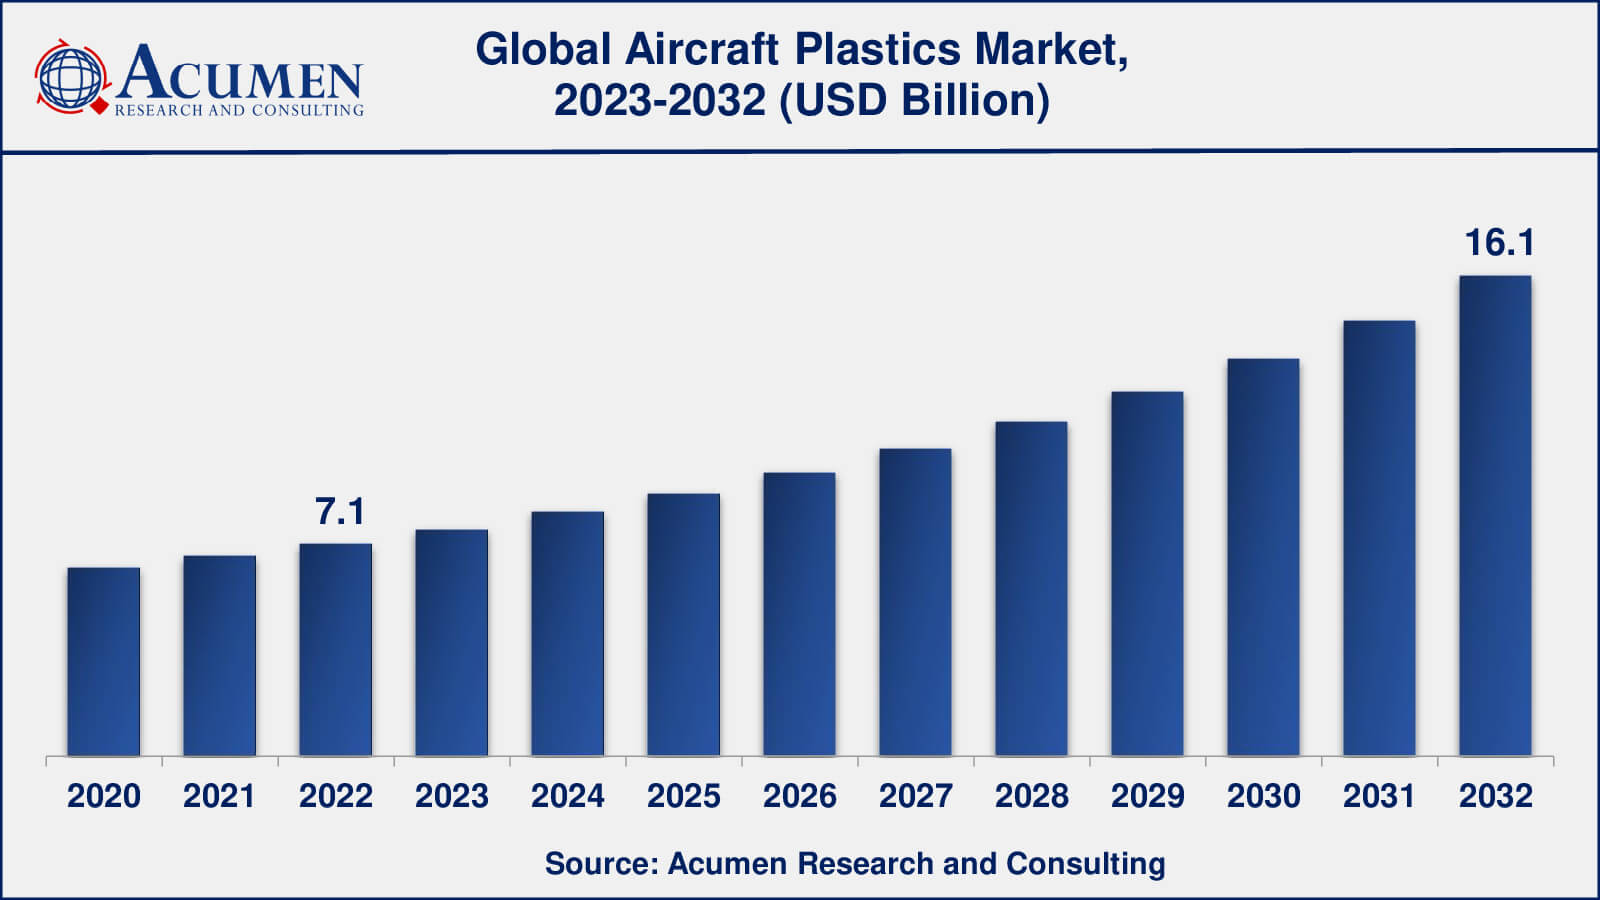 Global Aircraft Plastics Market Dynamics